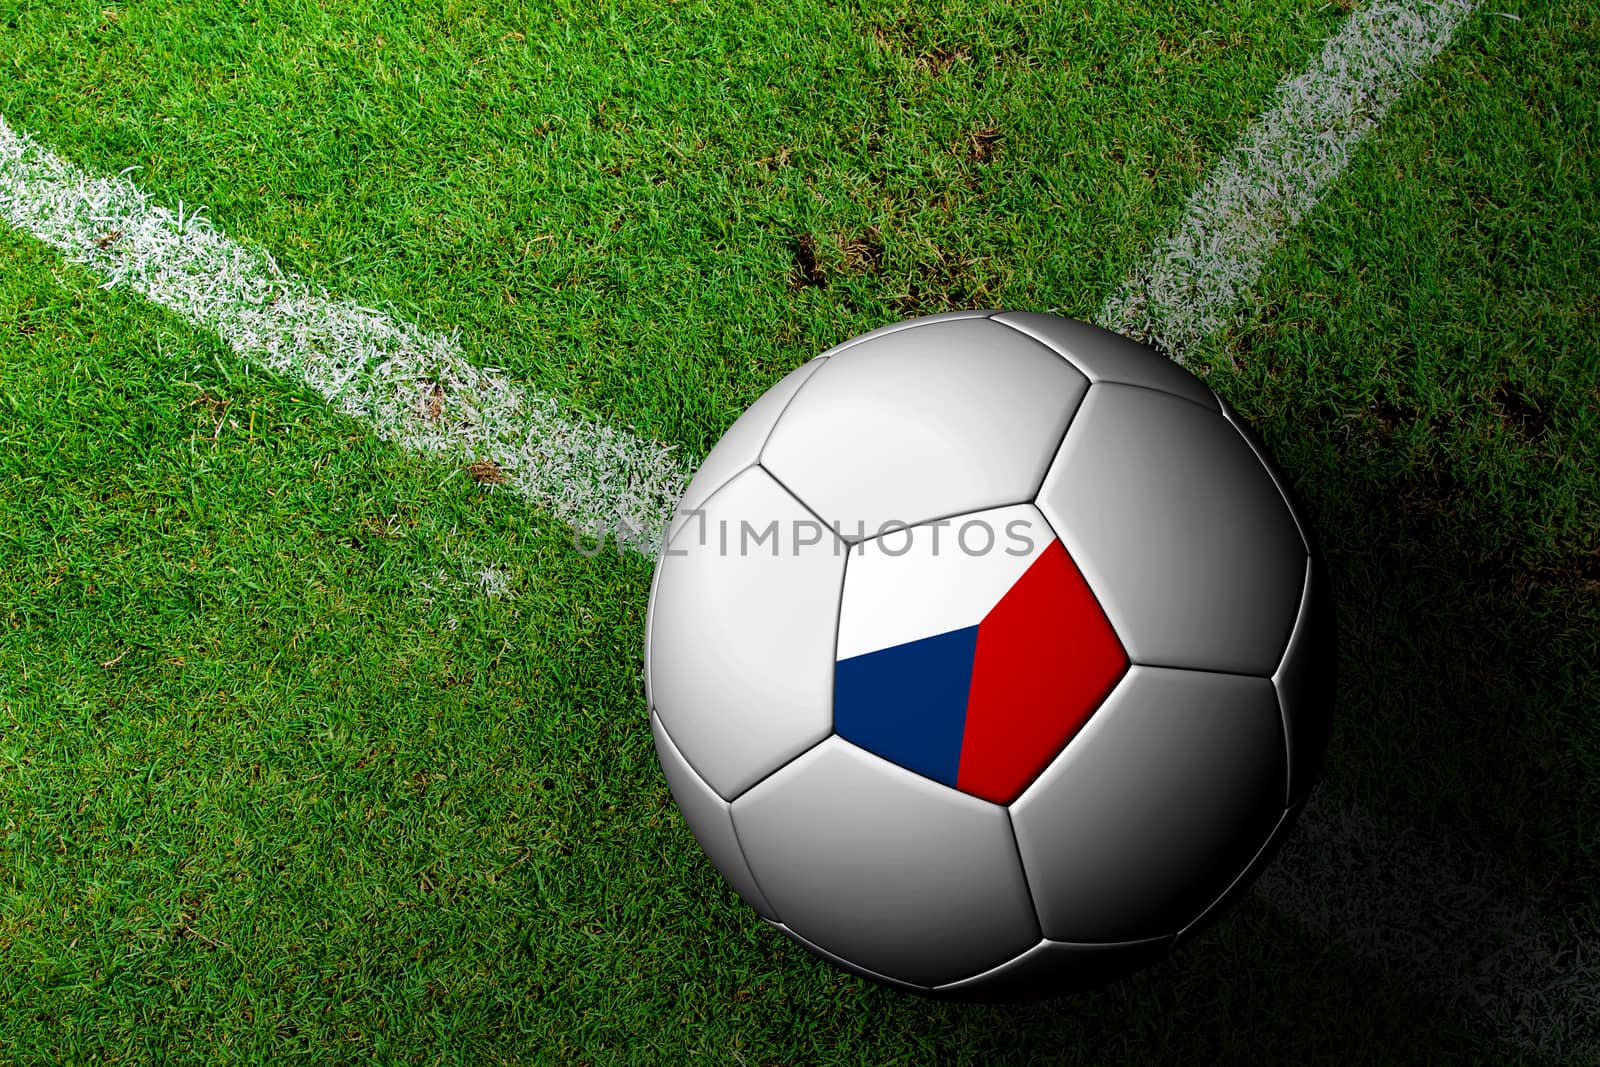 Czech Flag Pattern of a soccer ball in green grass by jakgree